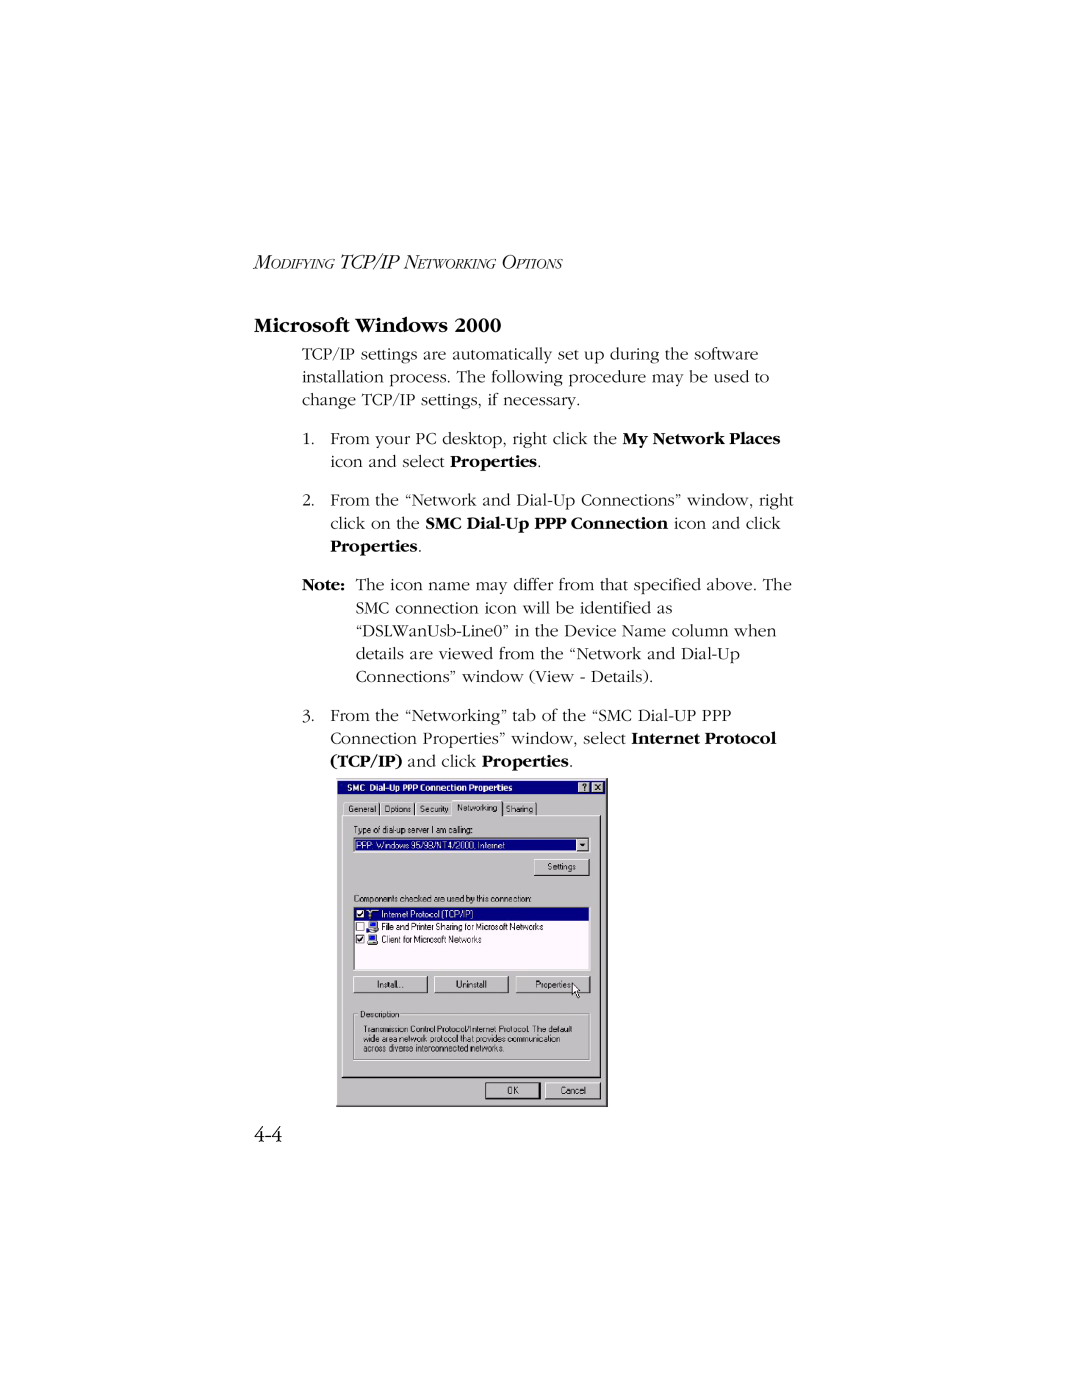 SMC Networks SMC7003-USB manual Microsoft Windows, Modifying Tcp/Ip Networking Options 